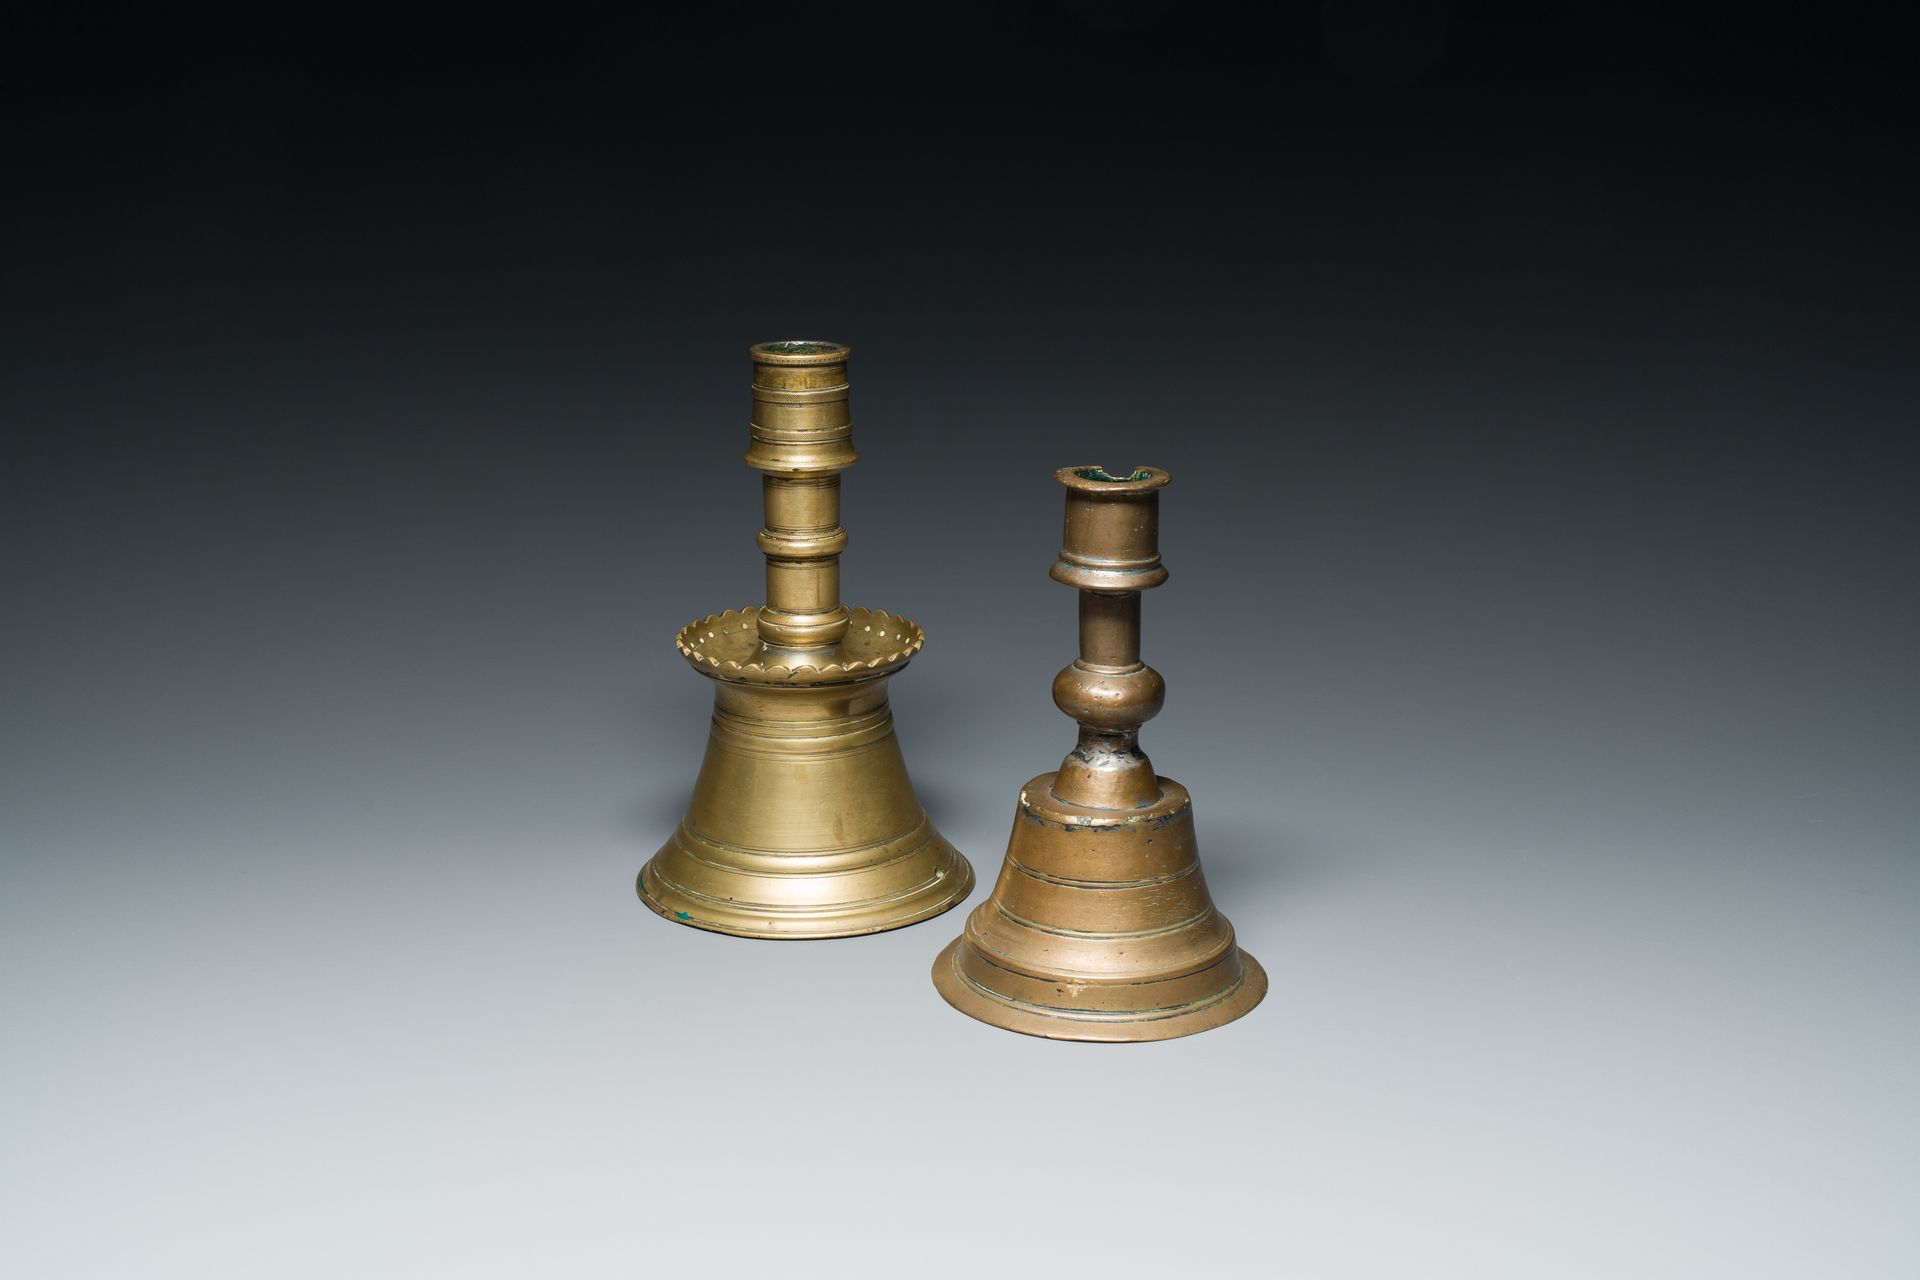 Two Ottoman bronze candlesticks, 17th C. 两只奥斯曼青铜烛台，17 世纪

高：25.5 厘米（最高的一个）